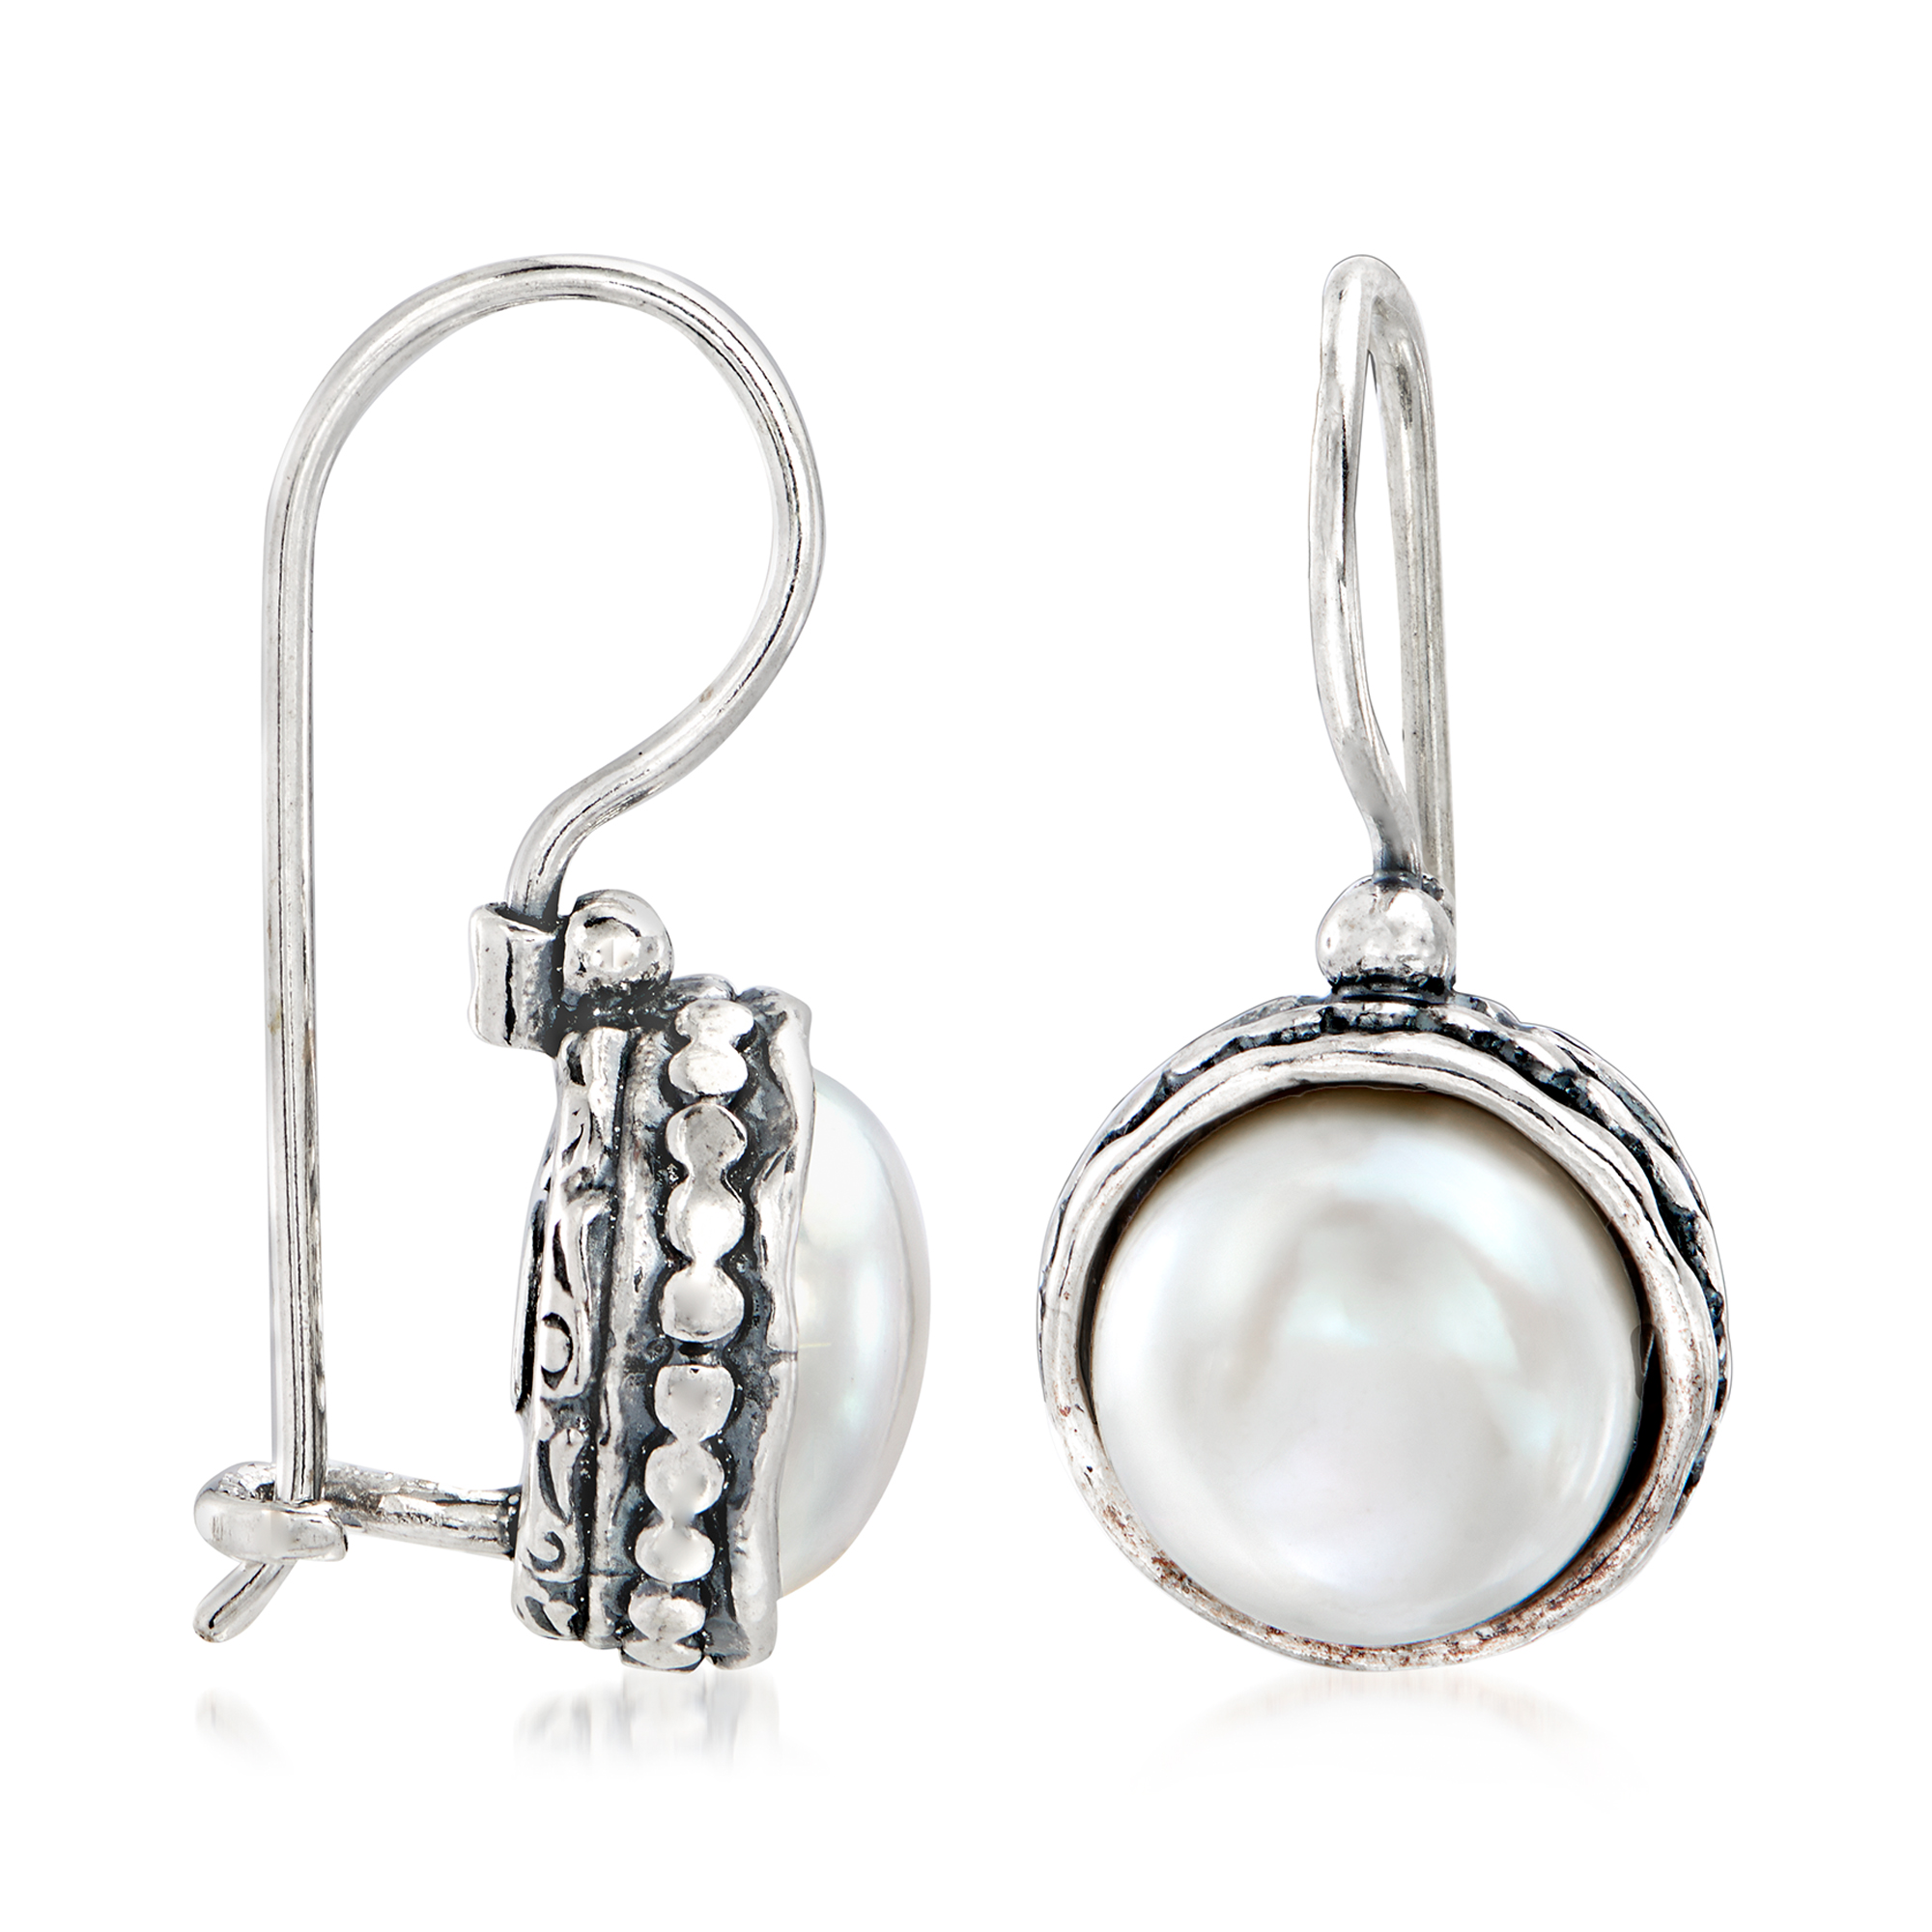 9.5-10mm Cultured Pearl Drop Earrings in Sterling Silver | Ross-Simons